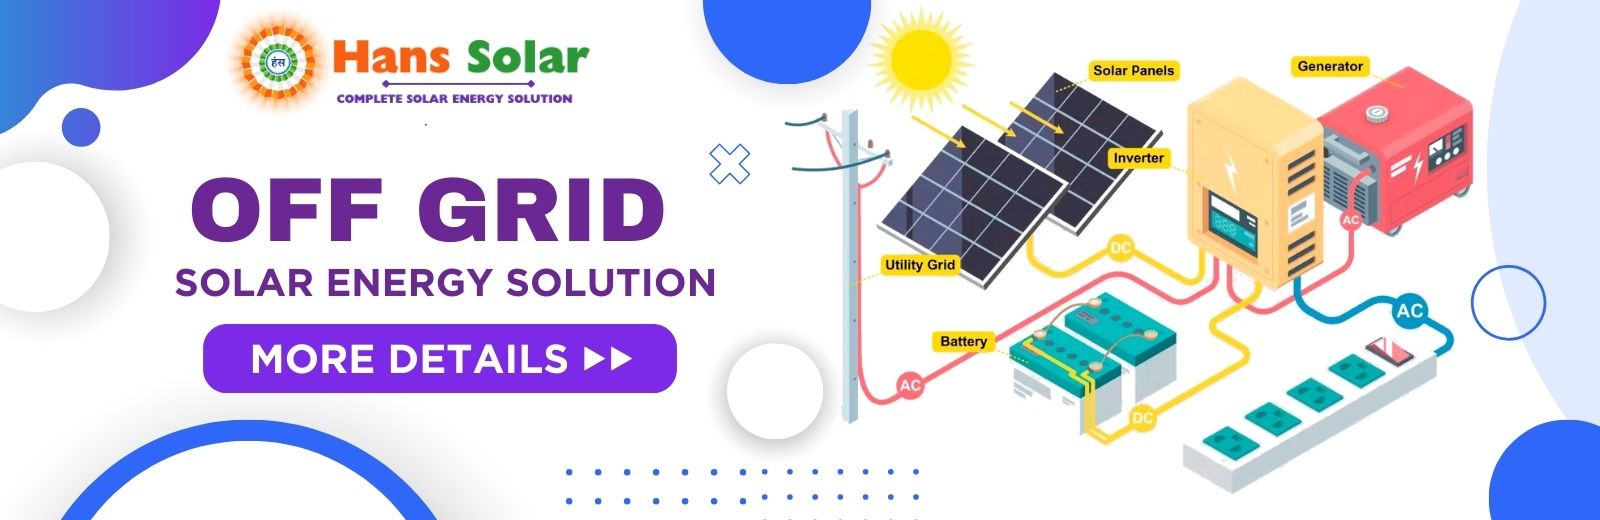 OFF GRID SOLAR ENERGY SOLUTION